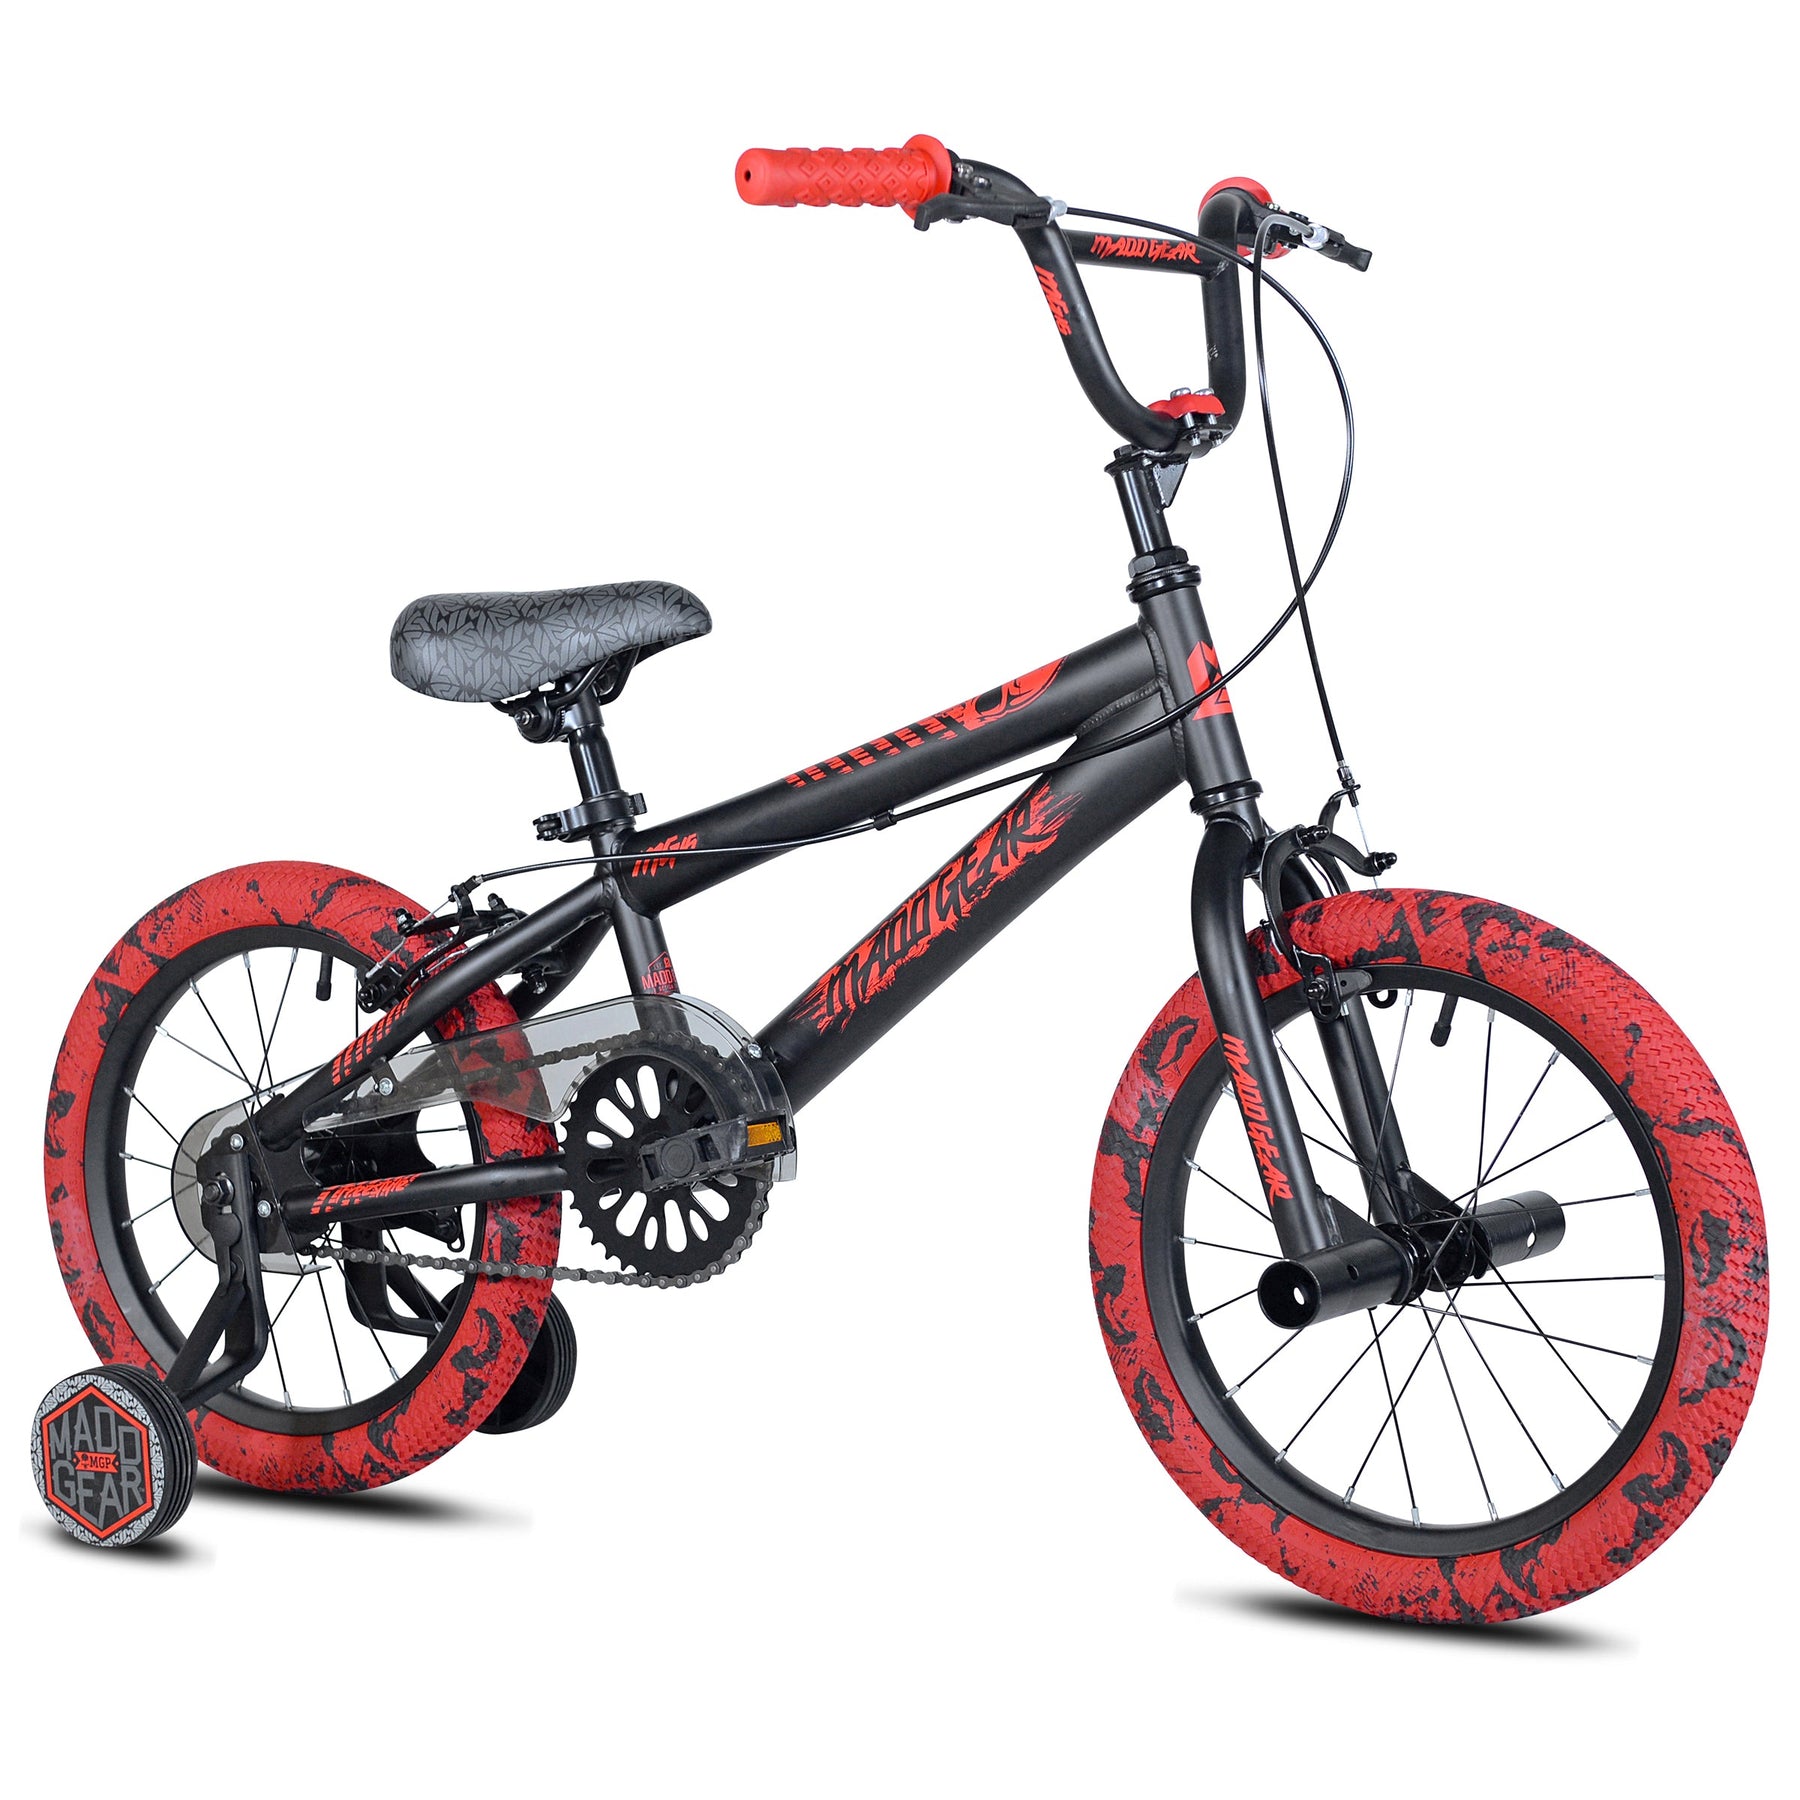 16" Madd Gear® MG16 - (Refurbished) | BMX Bike for Kids Ages 4-6